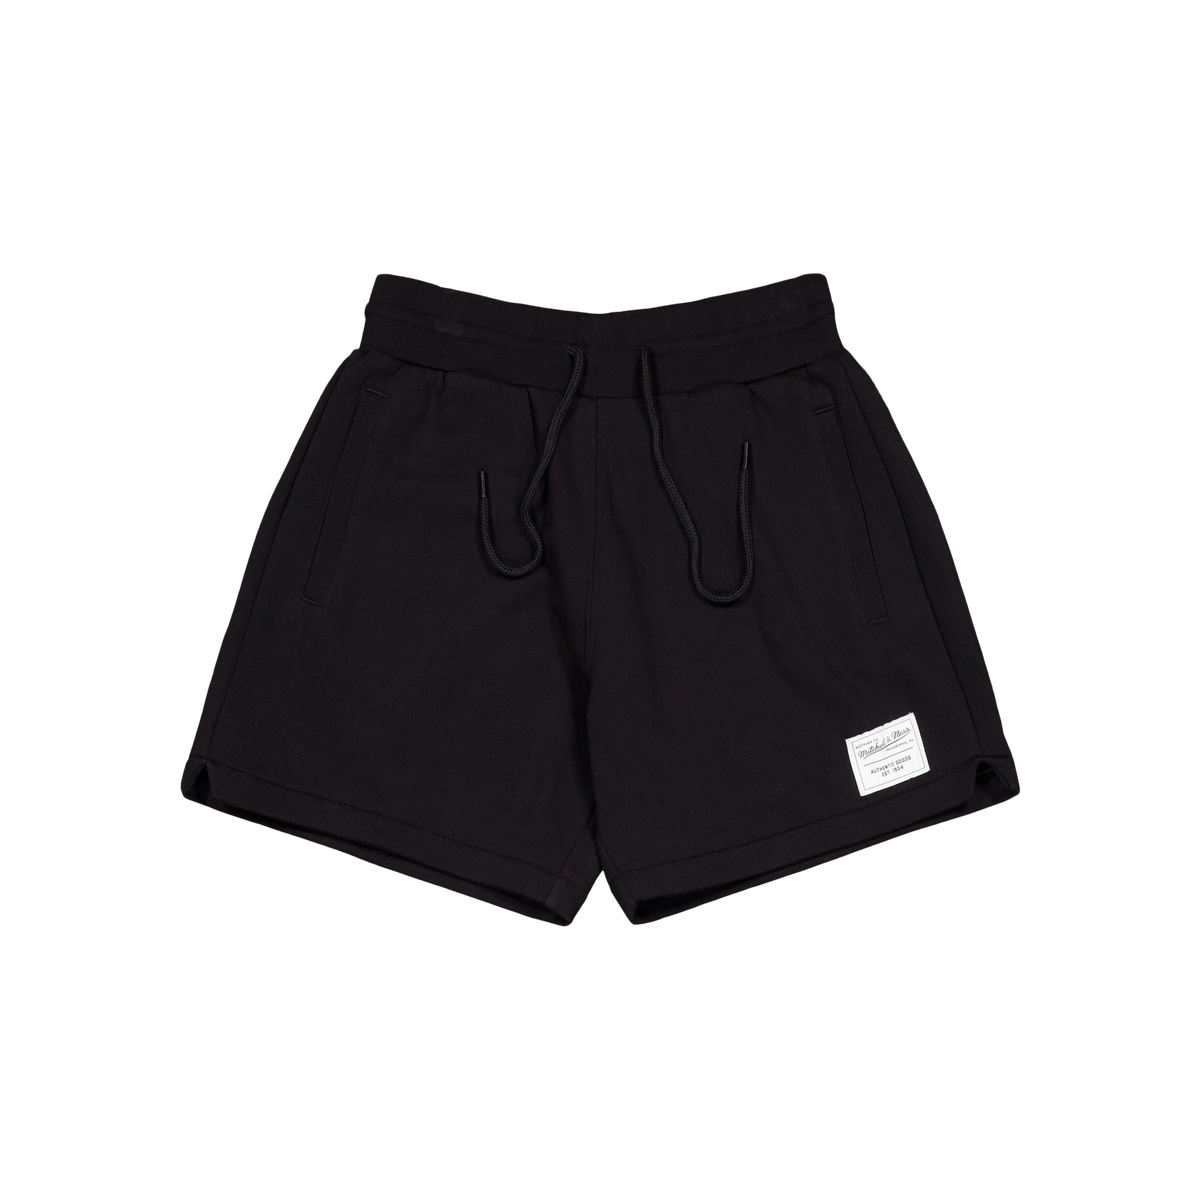 M&n Essentials Shorts Black/white